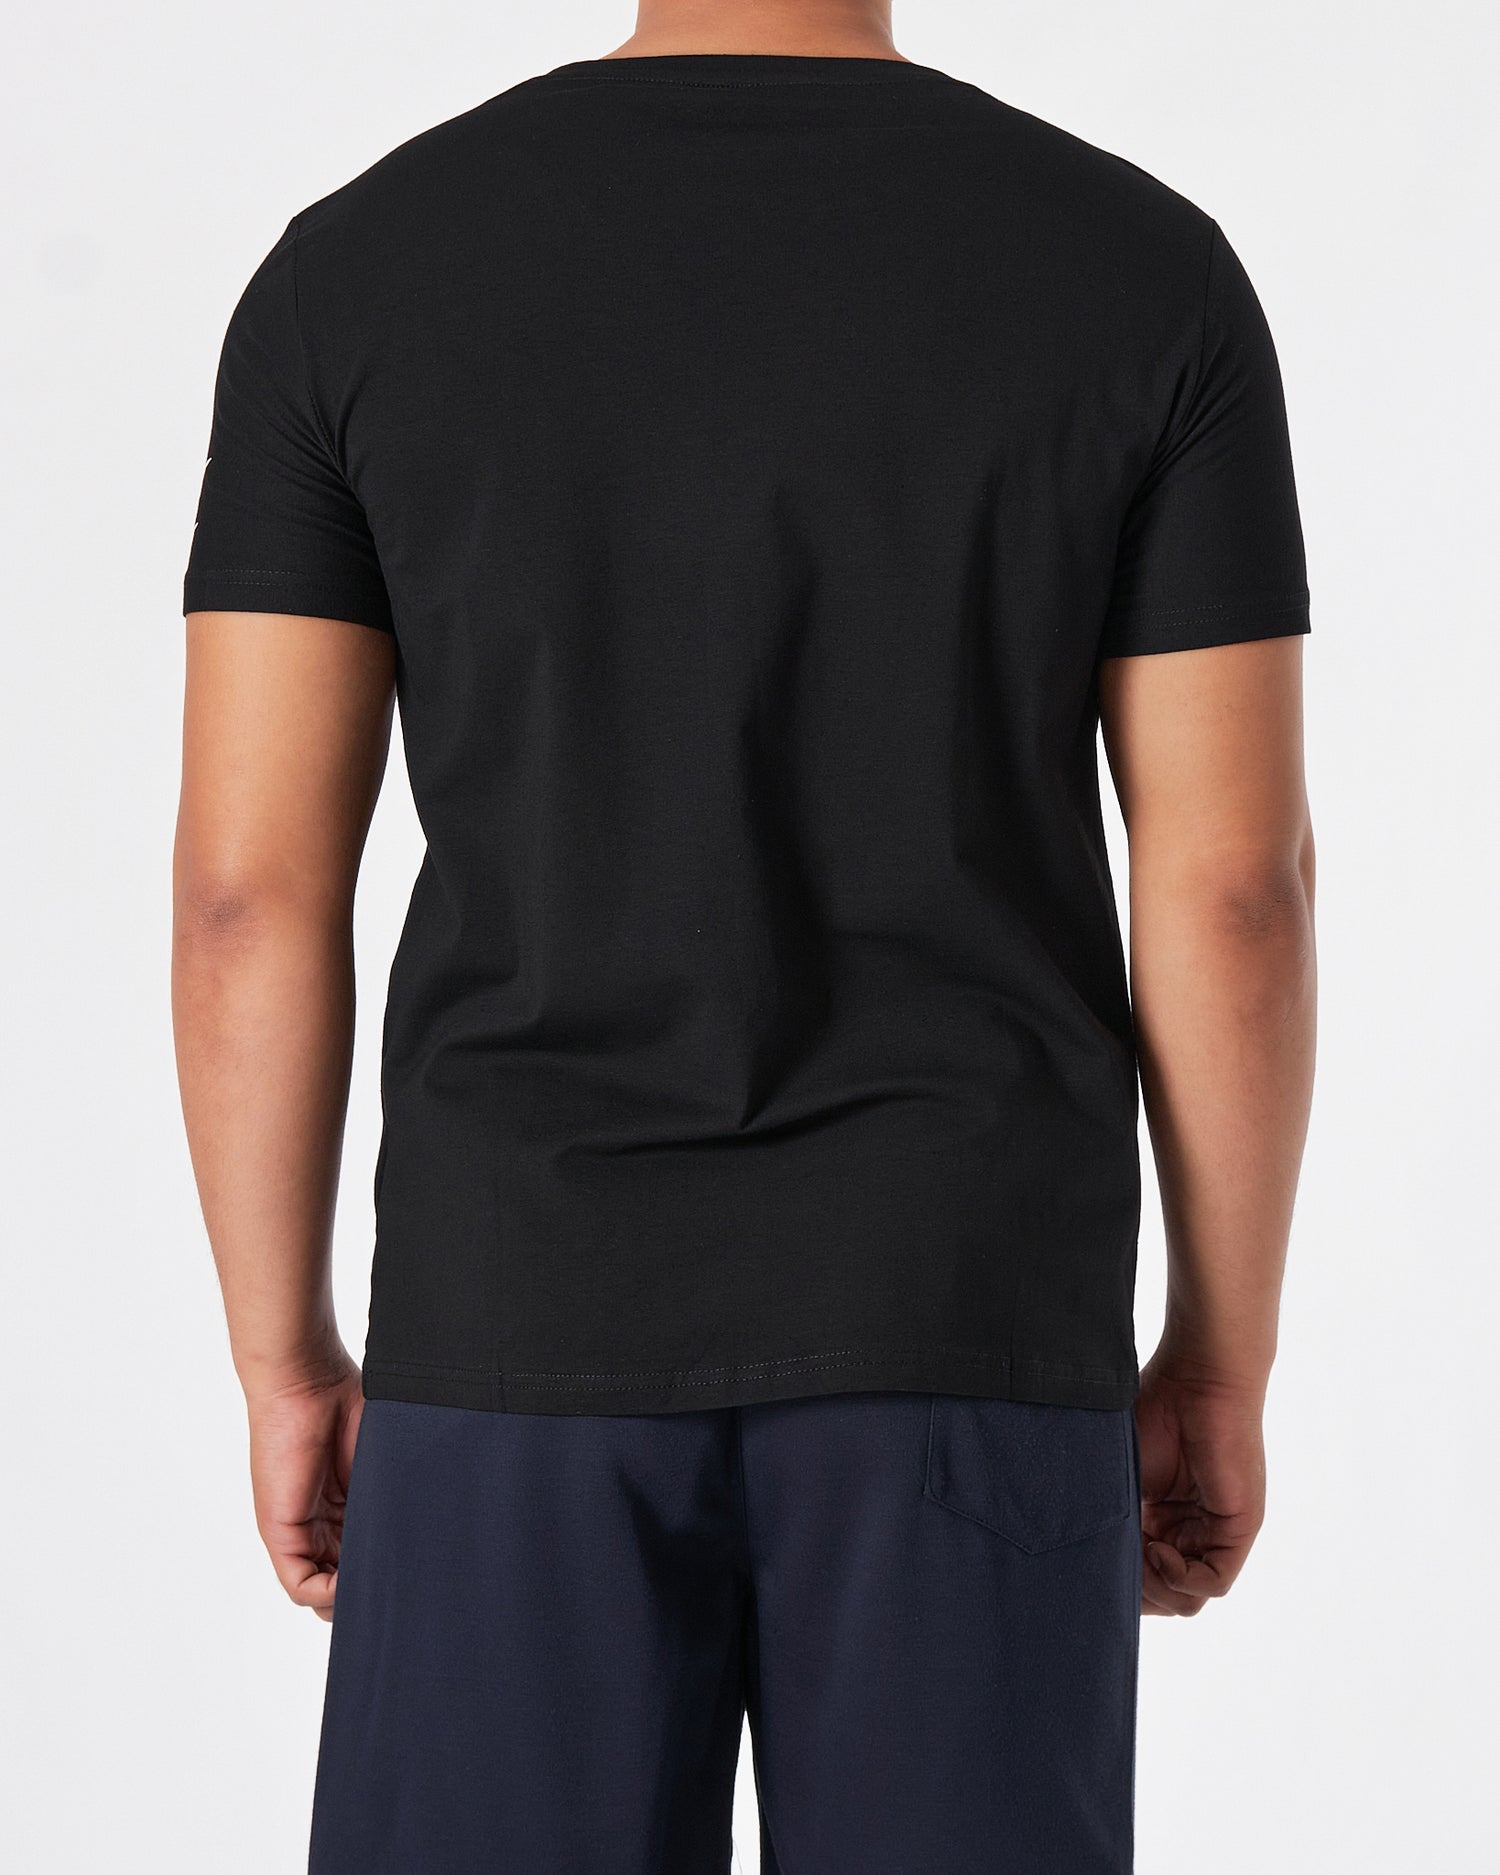 NIK Logo Printed Men Black T-Shirt 15.90